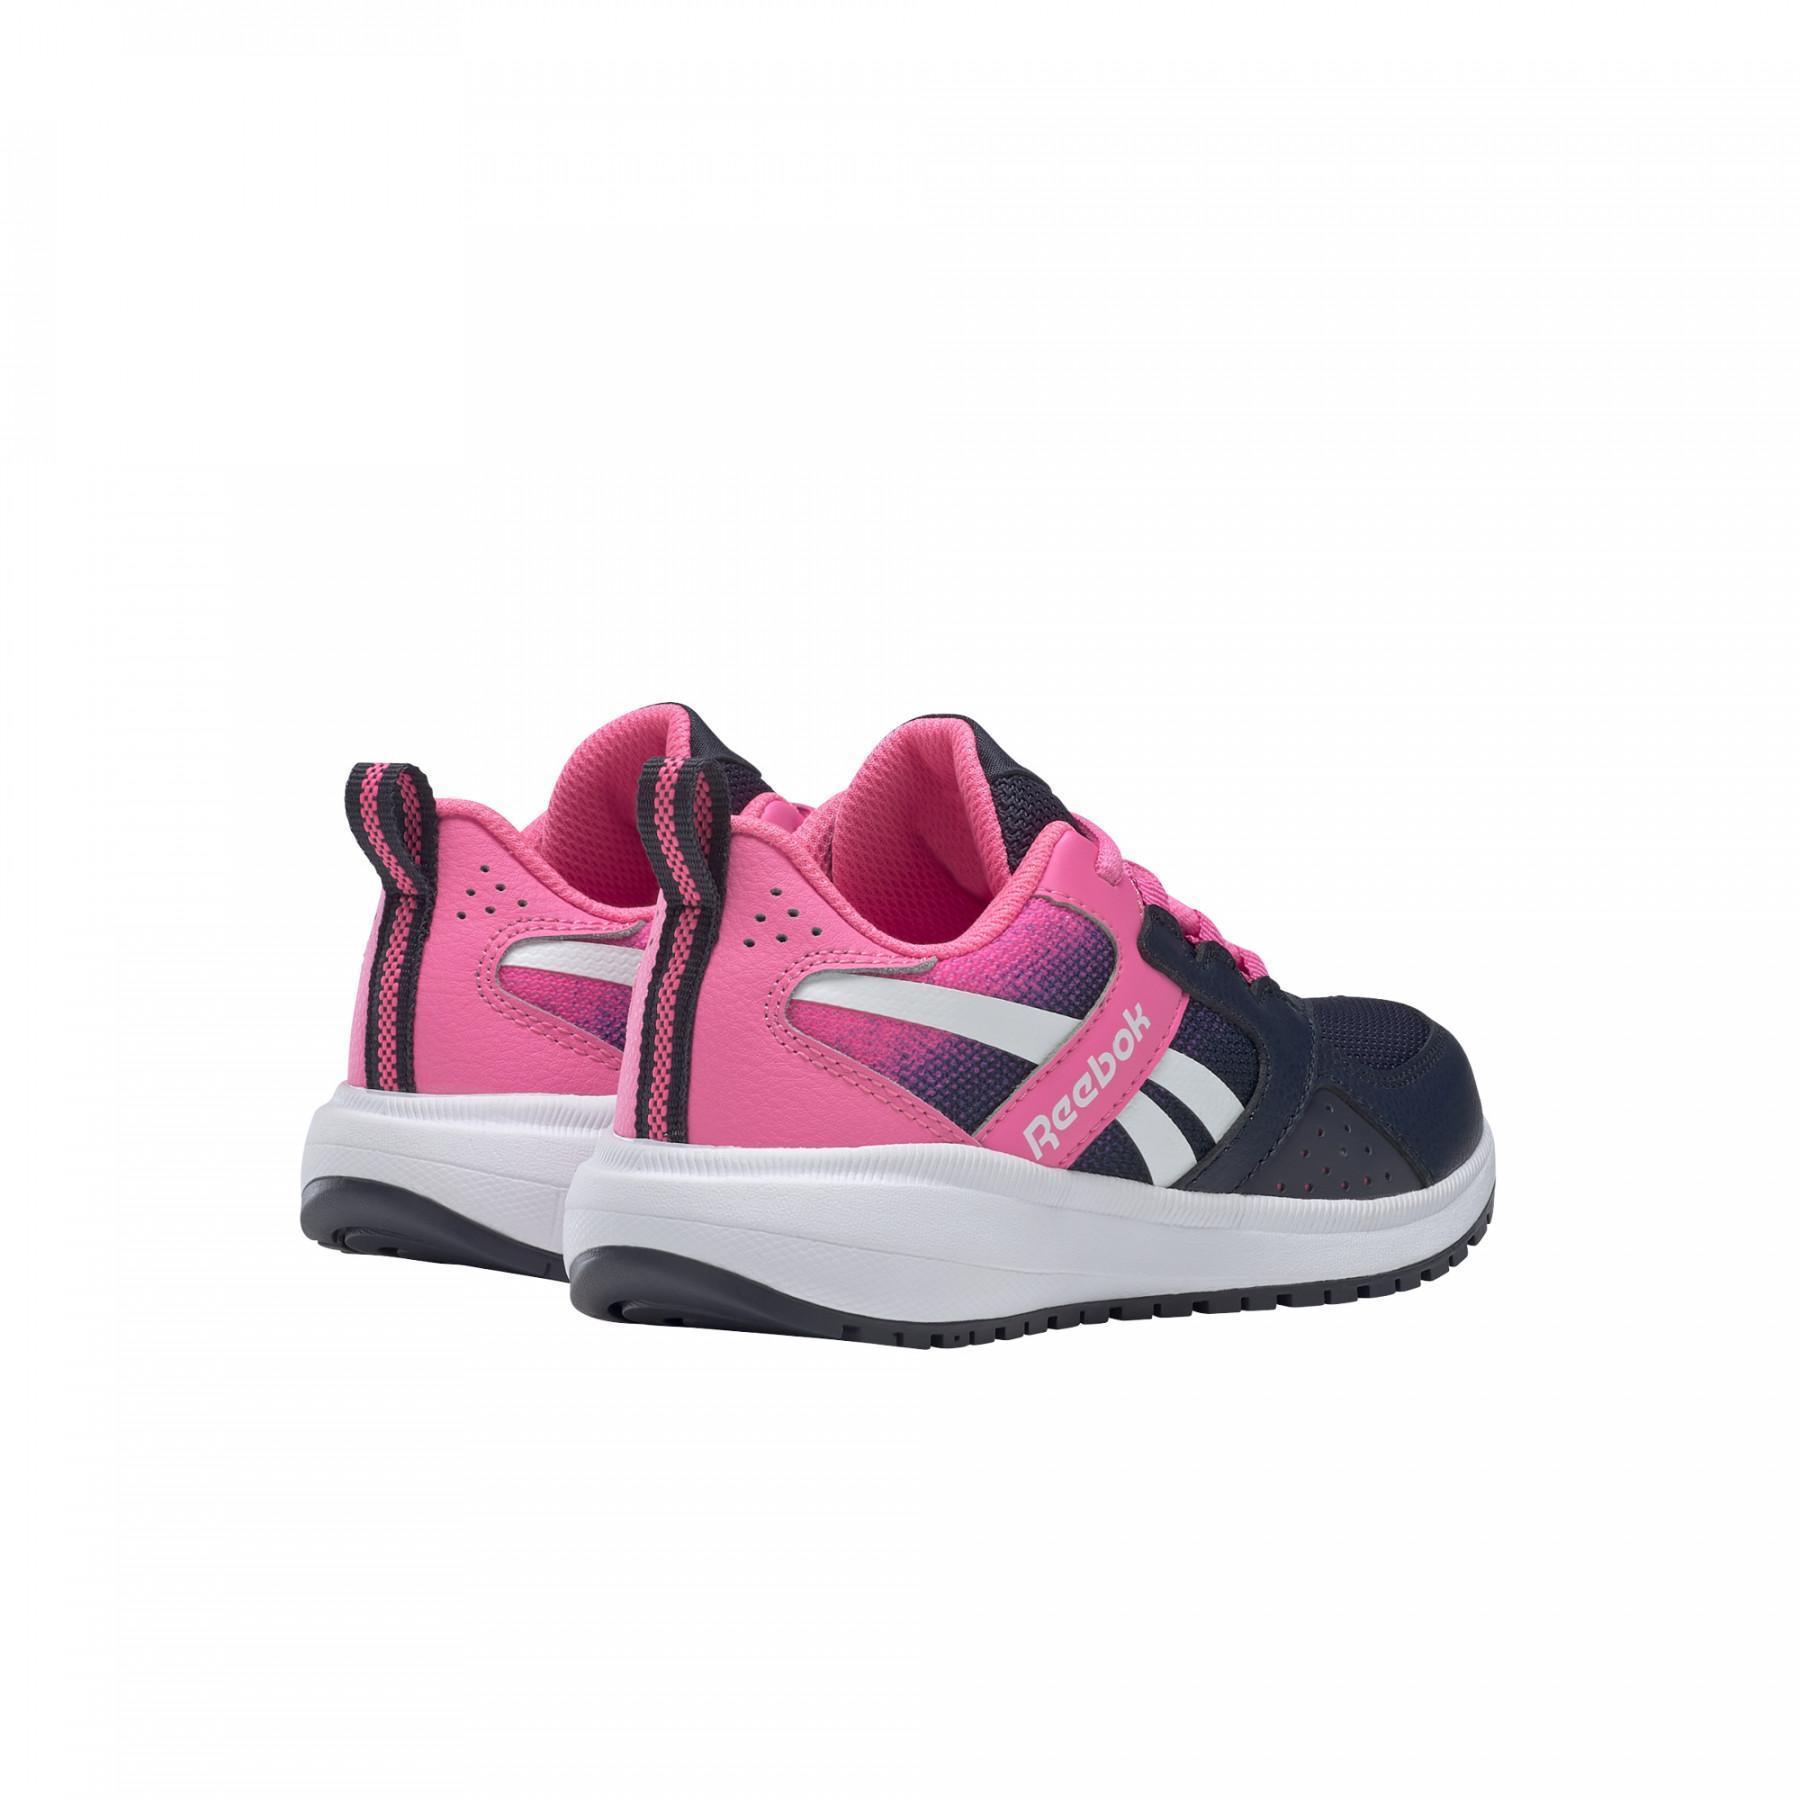 Girl's sneakers Reebok Road Supreme 2